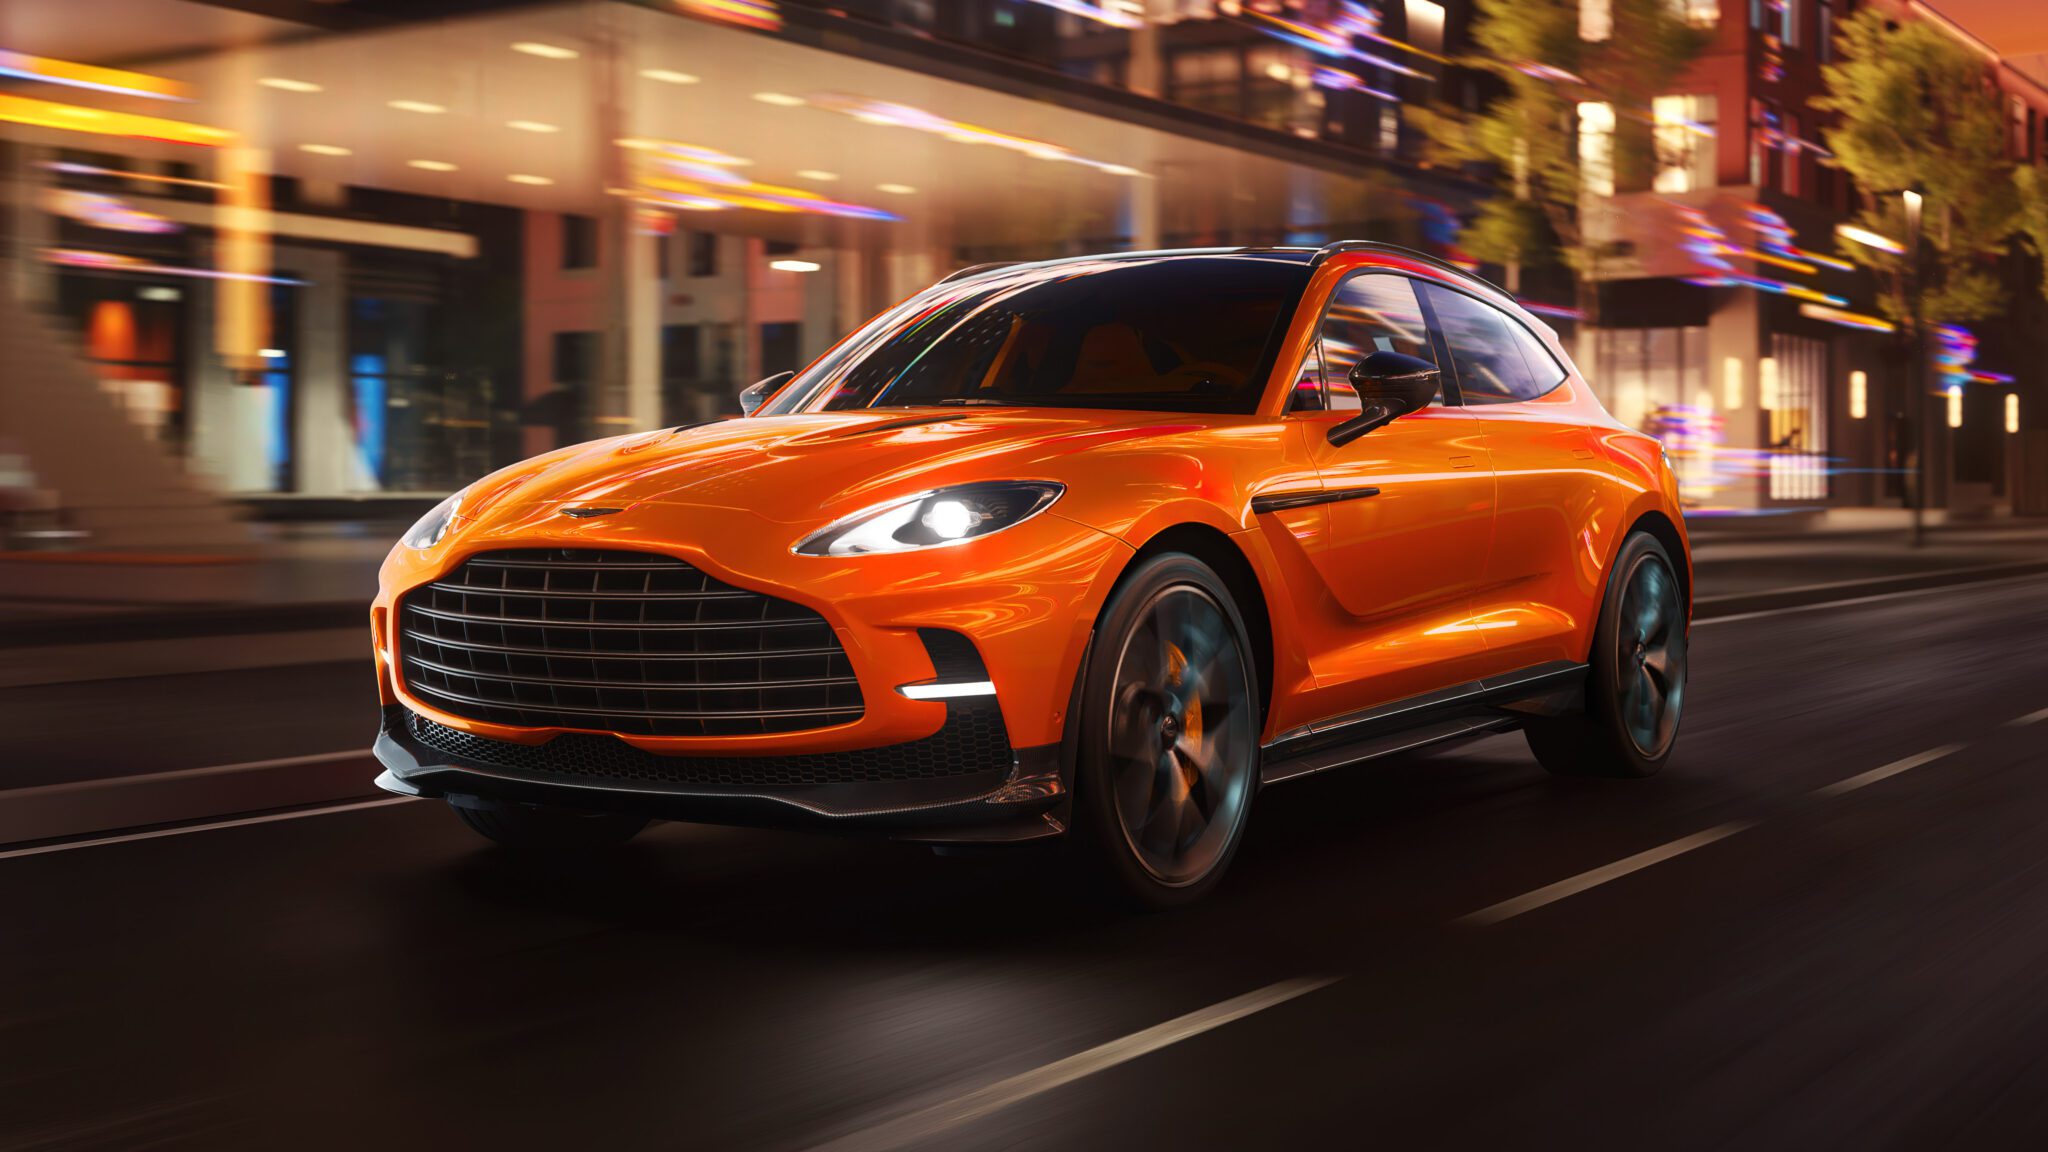 An image of an Aston Martin DBX on the street.